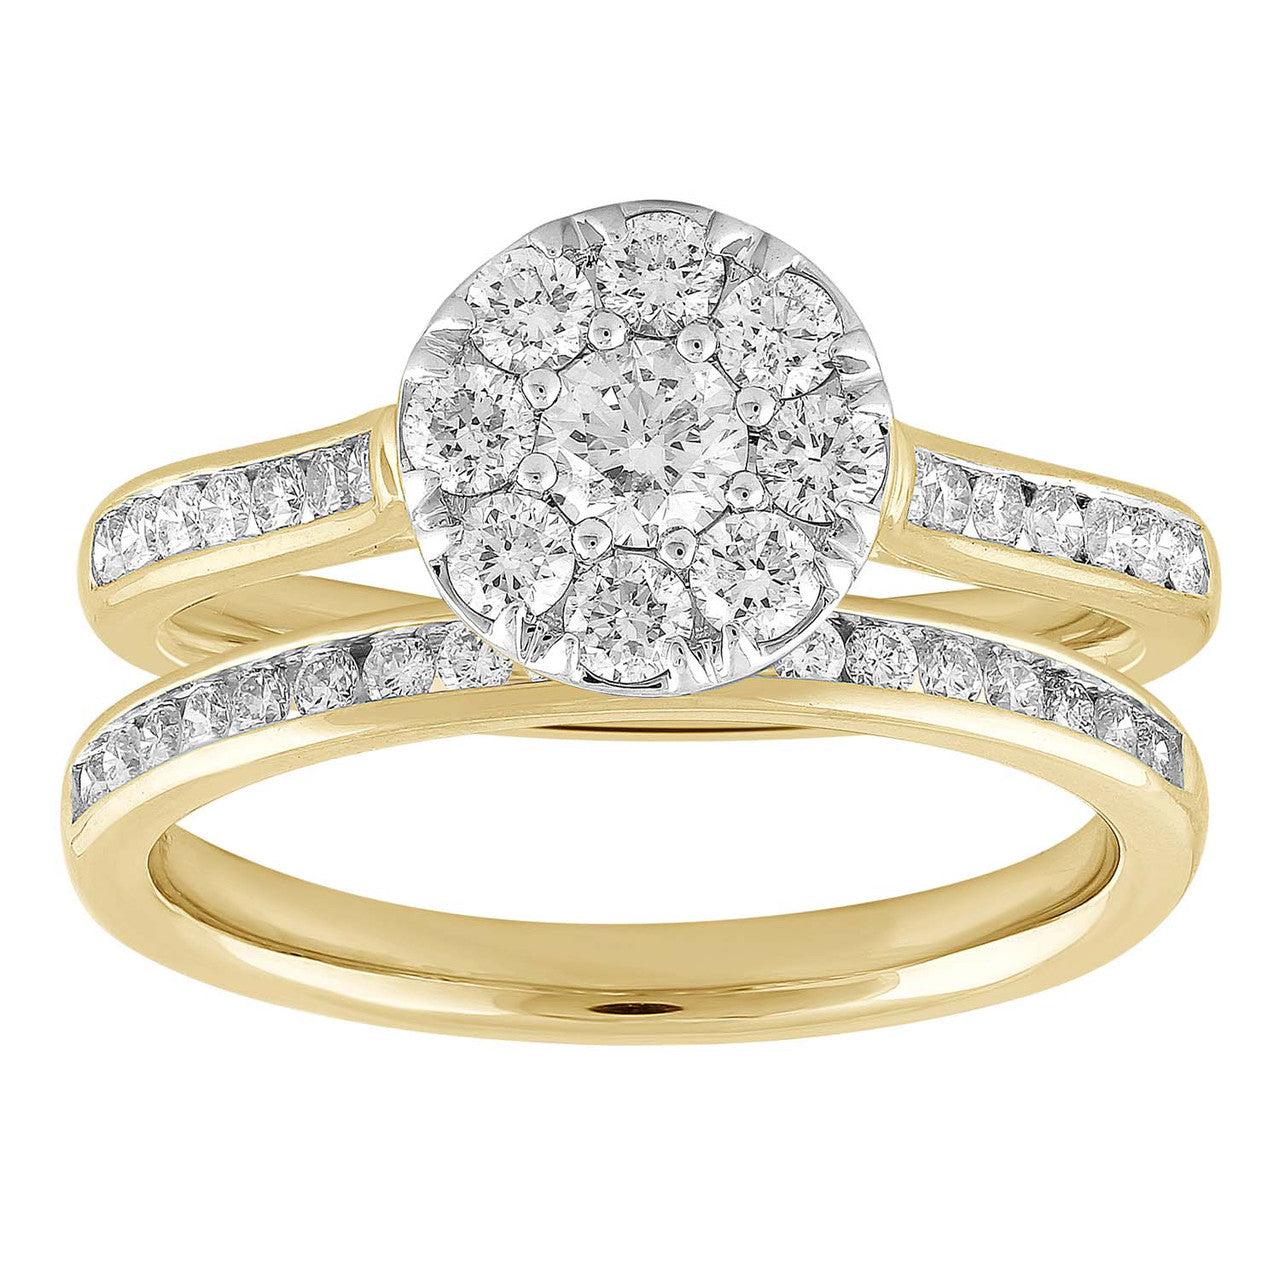 Ice Jewellery Ring Set with 1ct Diamond in 18K Yellow & White Gold -  R-37291-100-Y | Ice Jewellery Australia